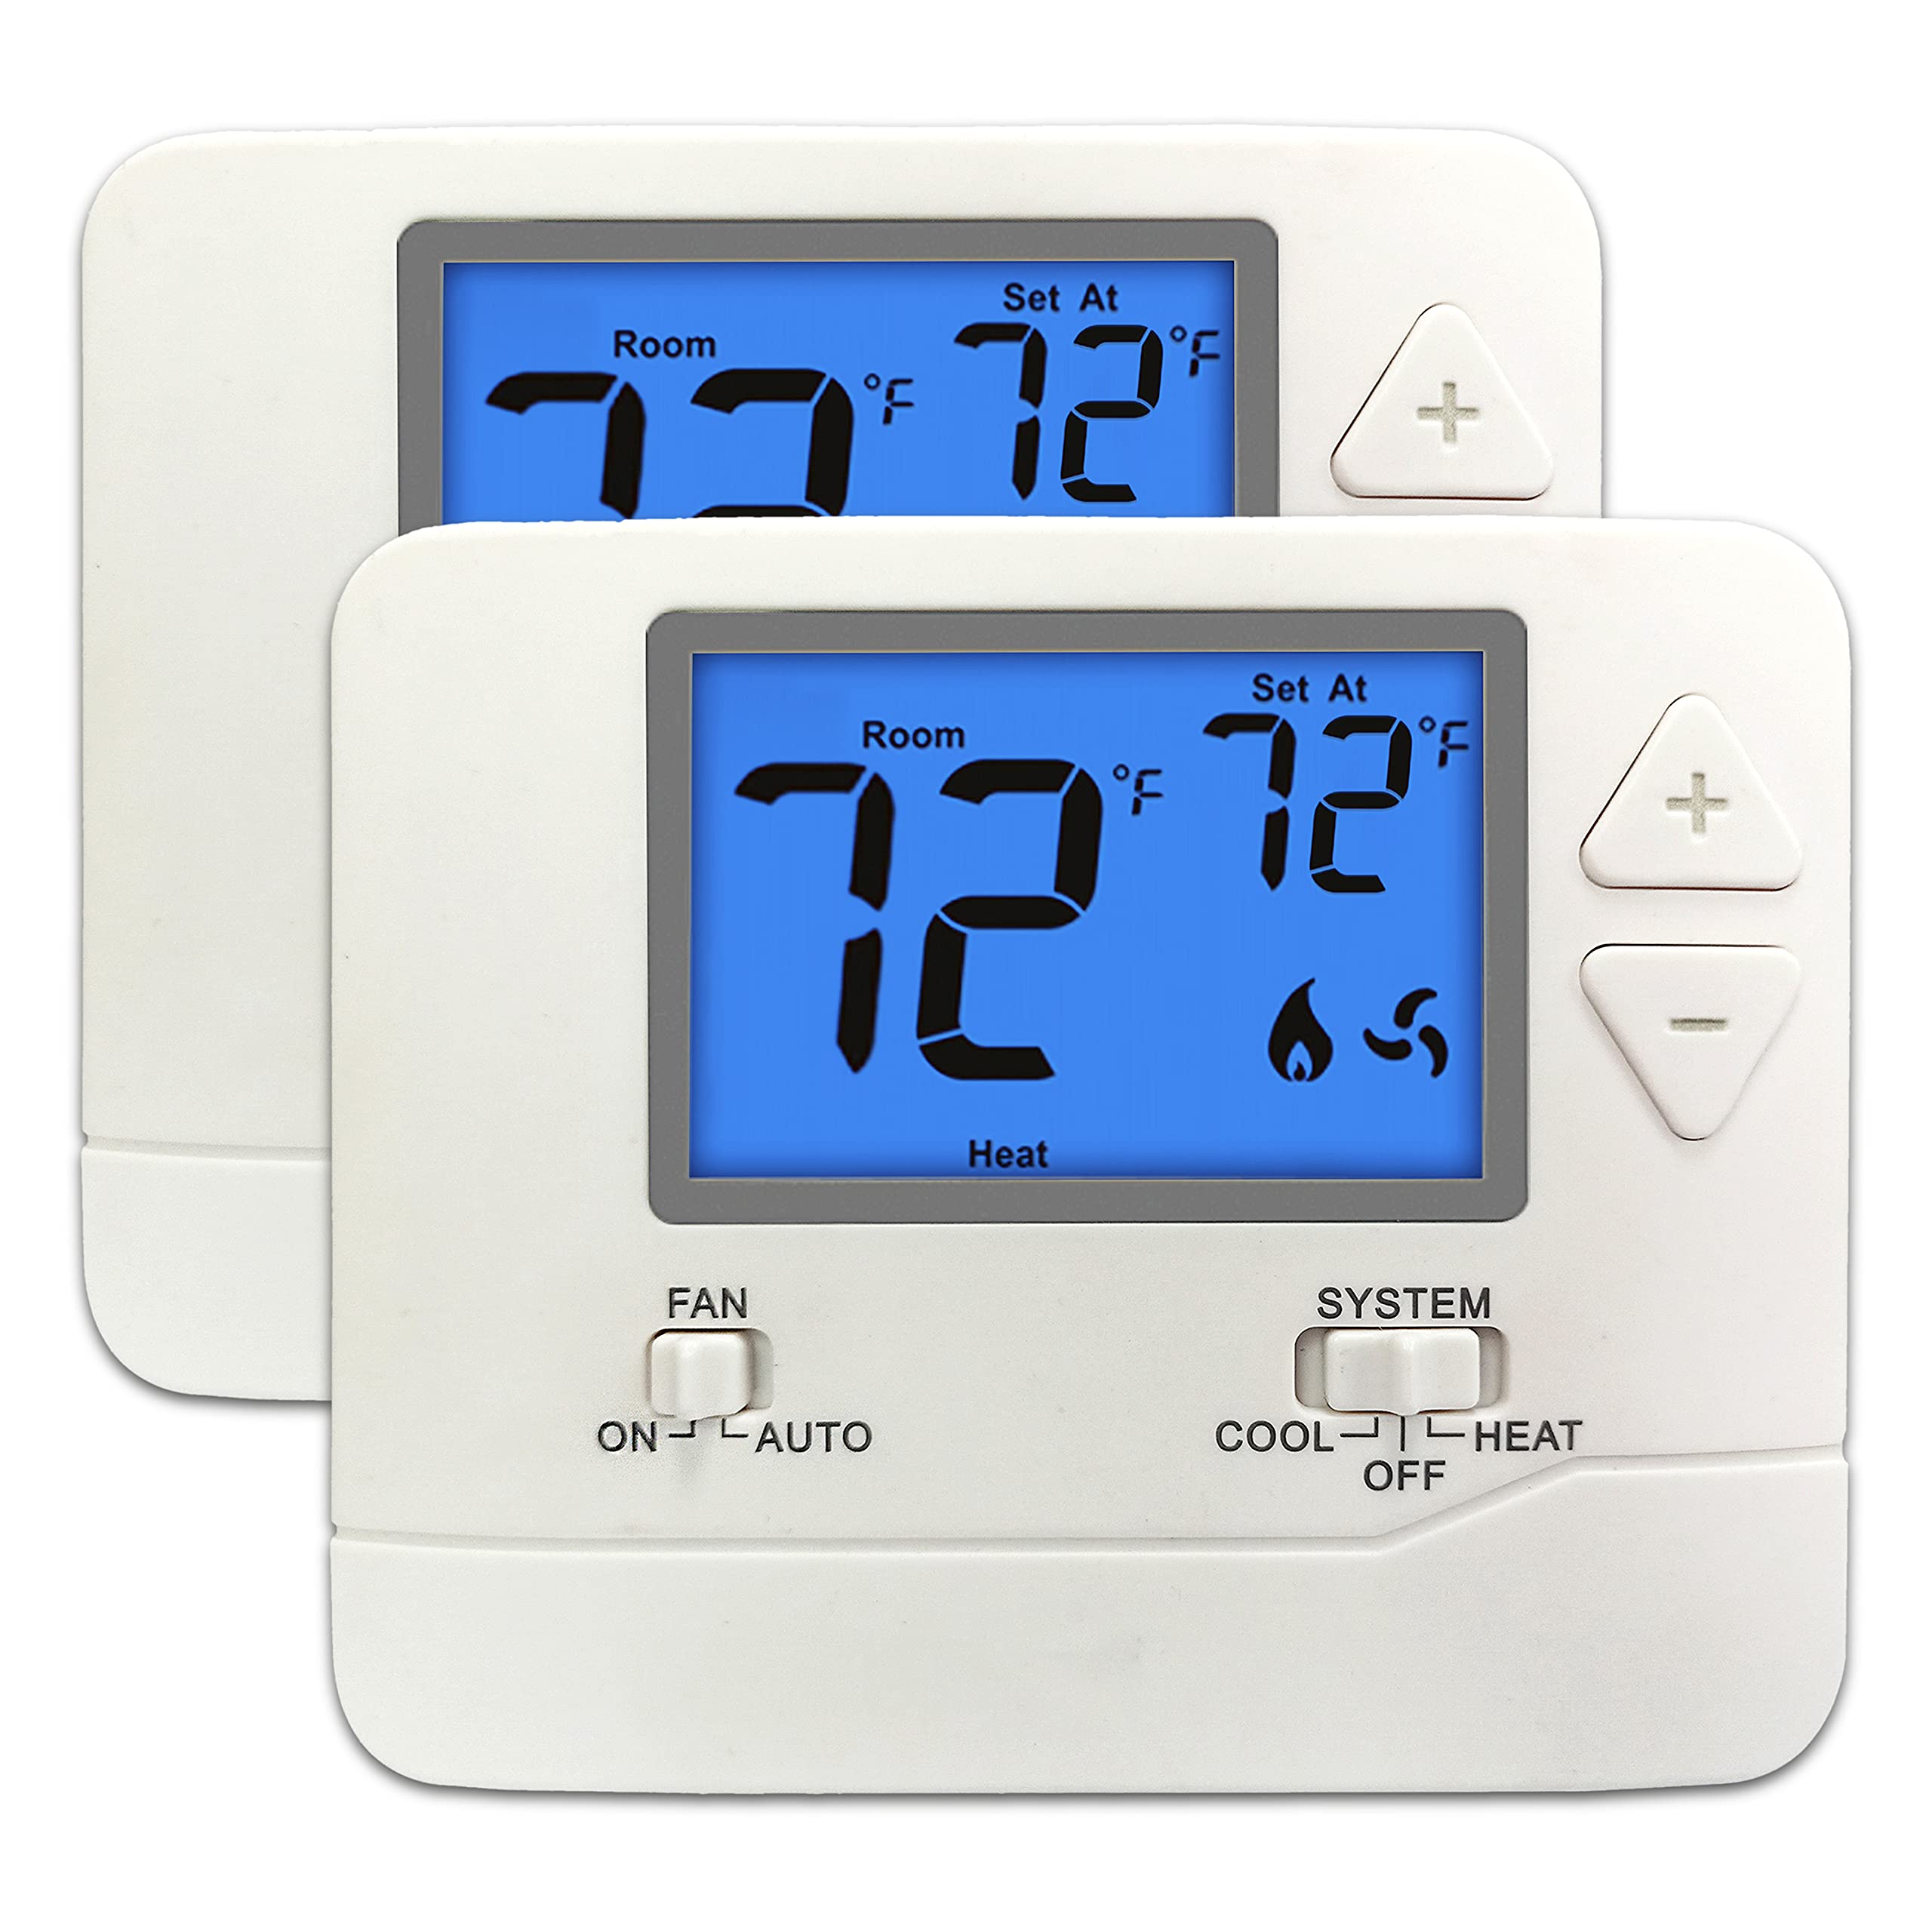 ELECTECK Digital Thermostat